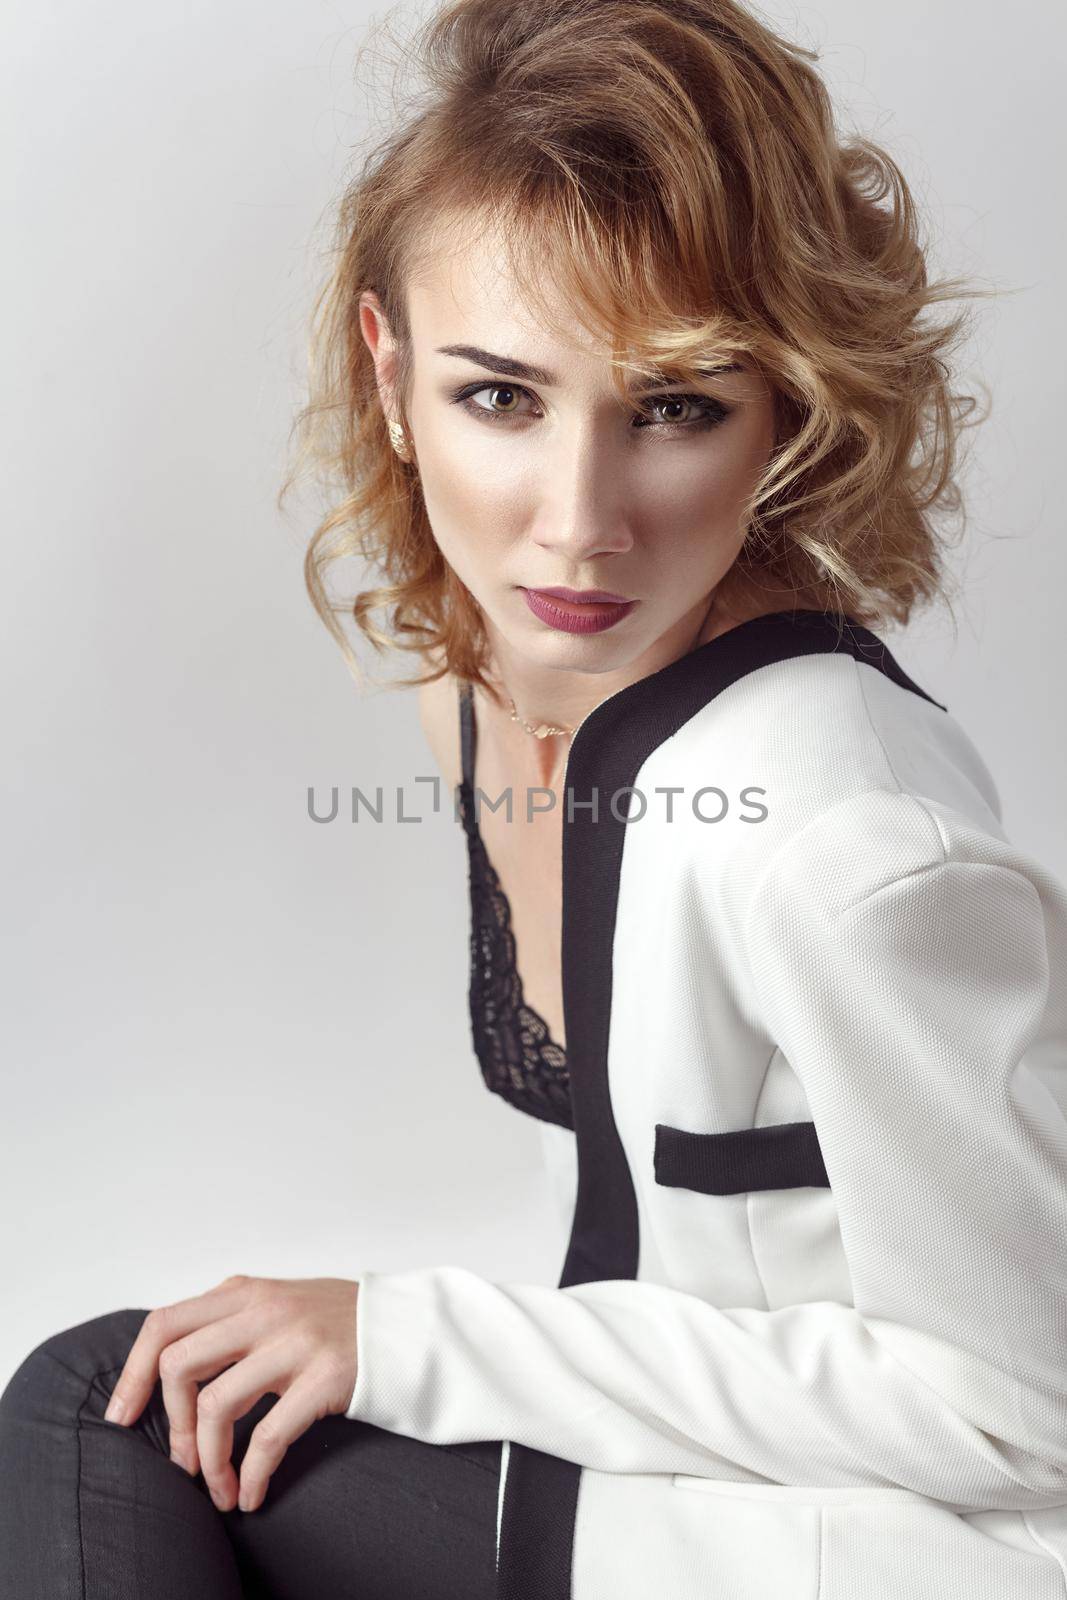 fashion model posing in white jacket on gray background. by Khosro1